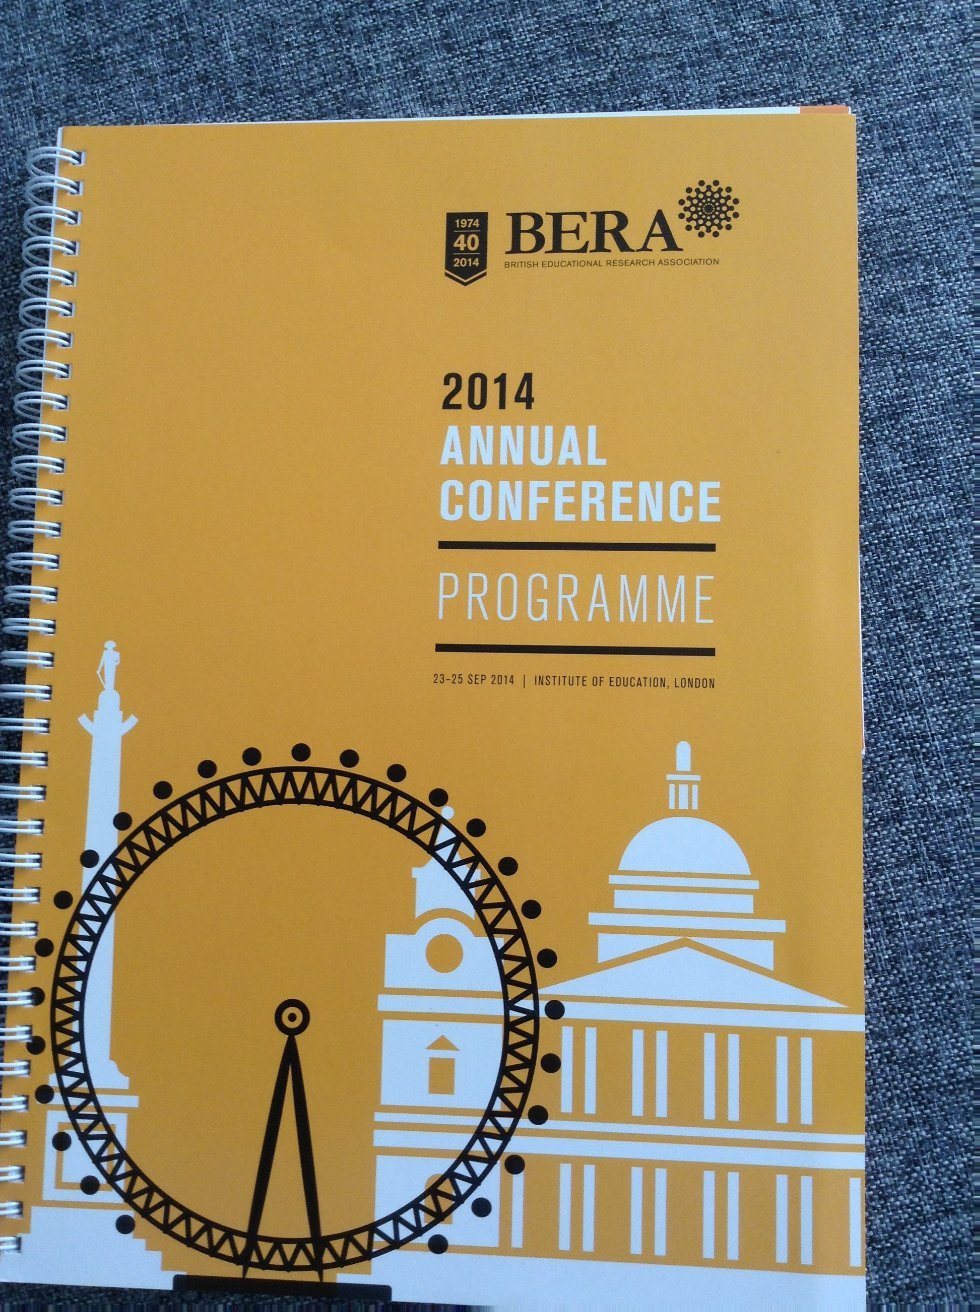 KFU professors at BERA conference in Great Britain ,BERA, education conference